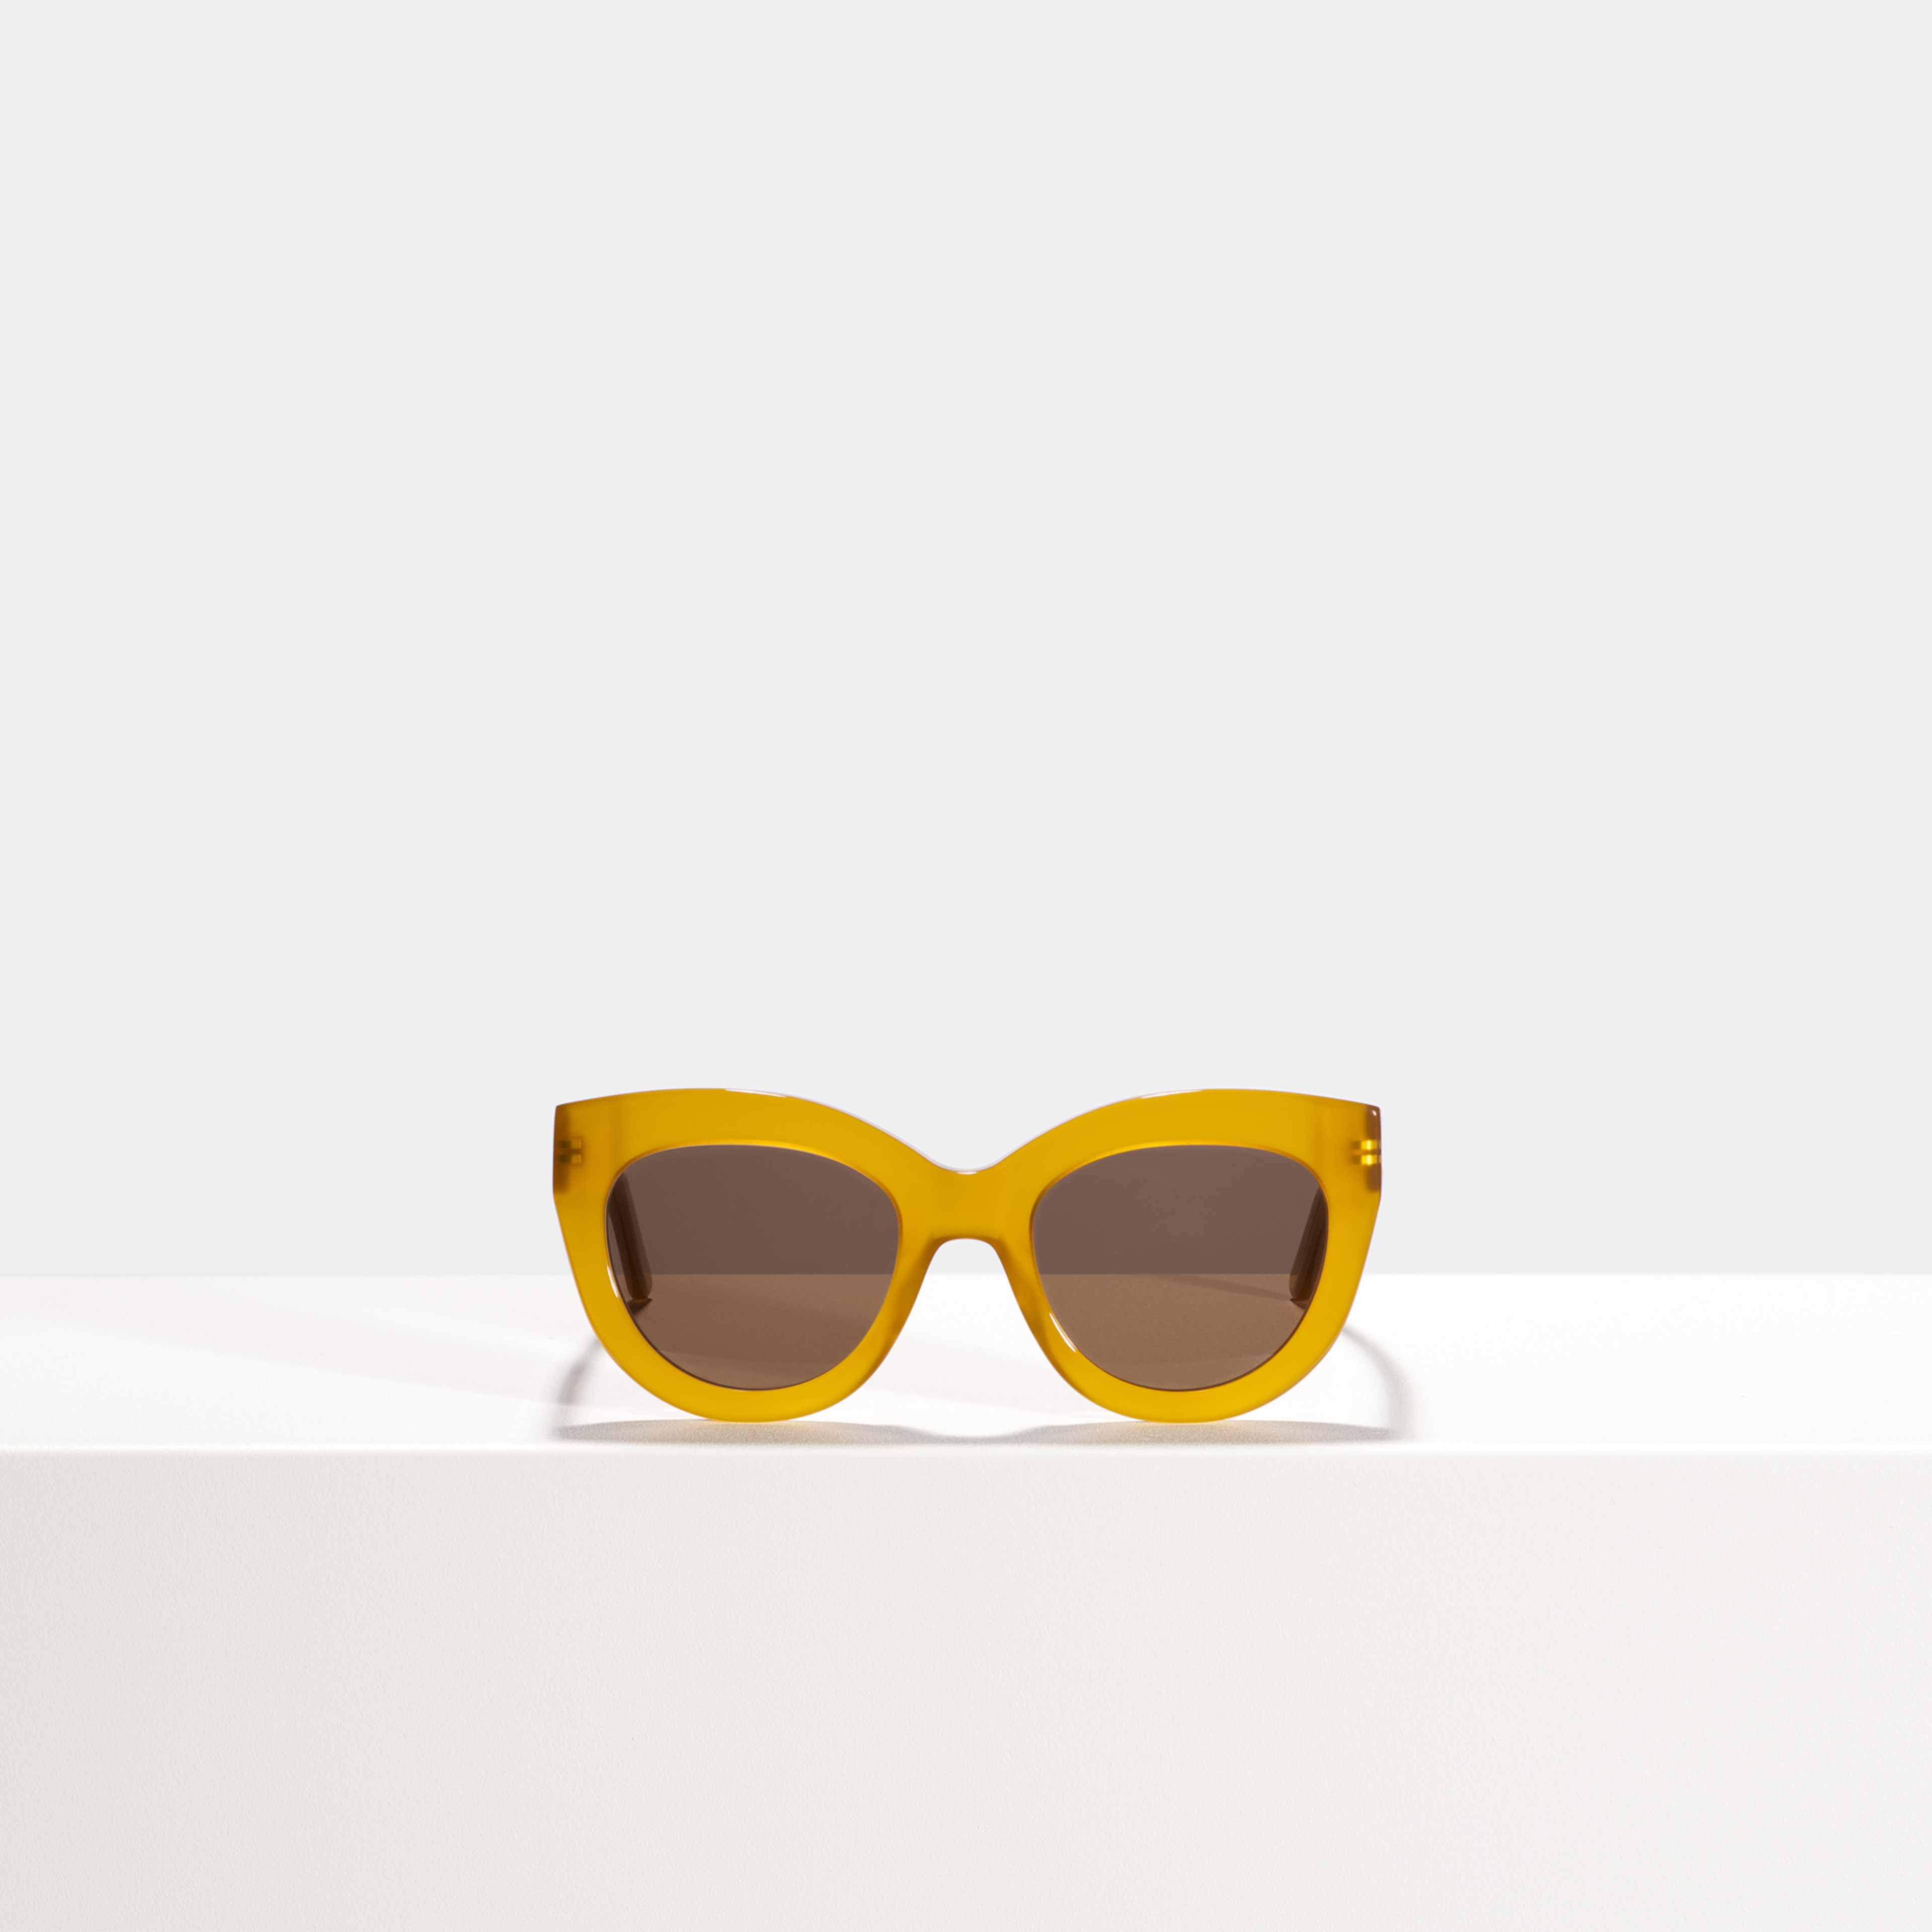 Ace & Tate Gafas de sol |  Acetato in Marrón, Naranja, Amarillo